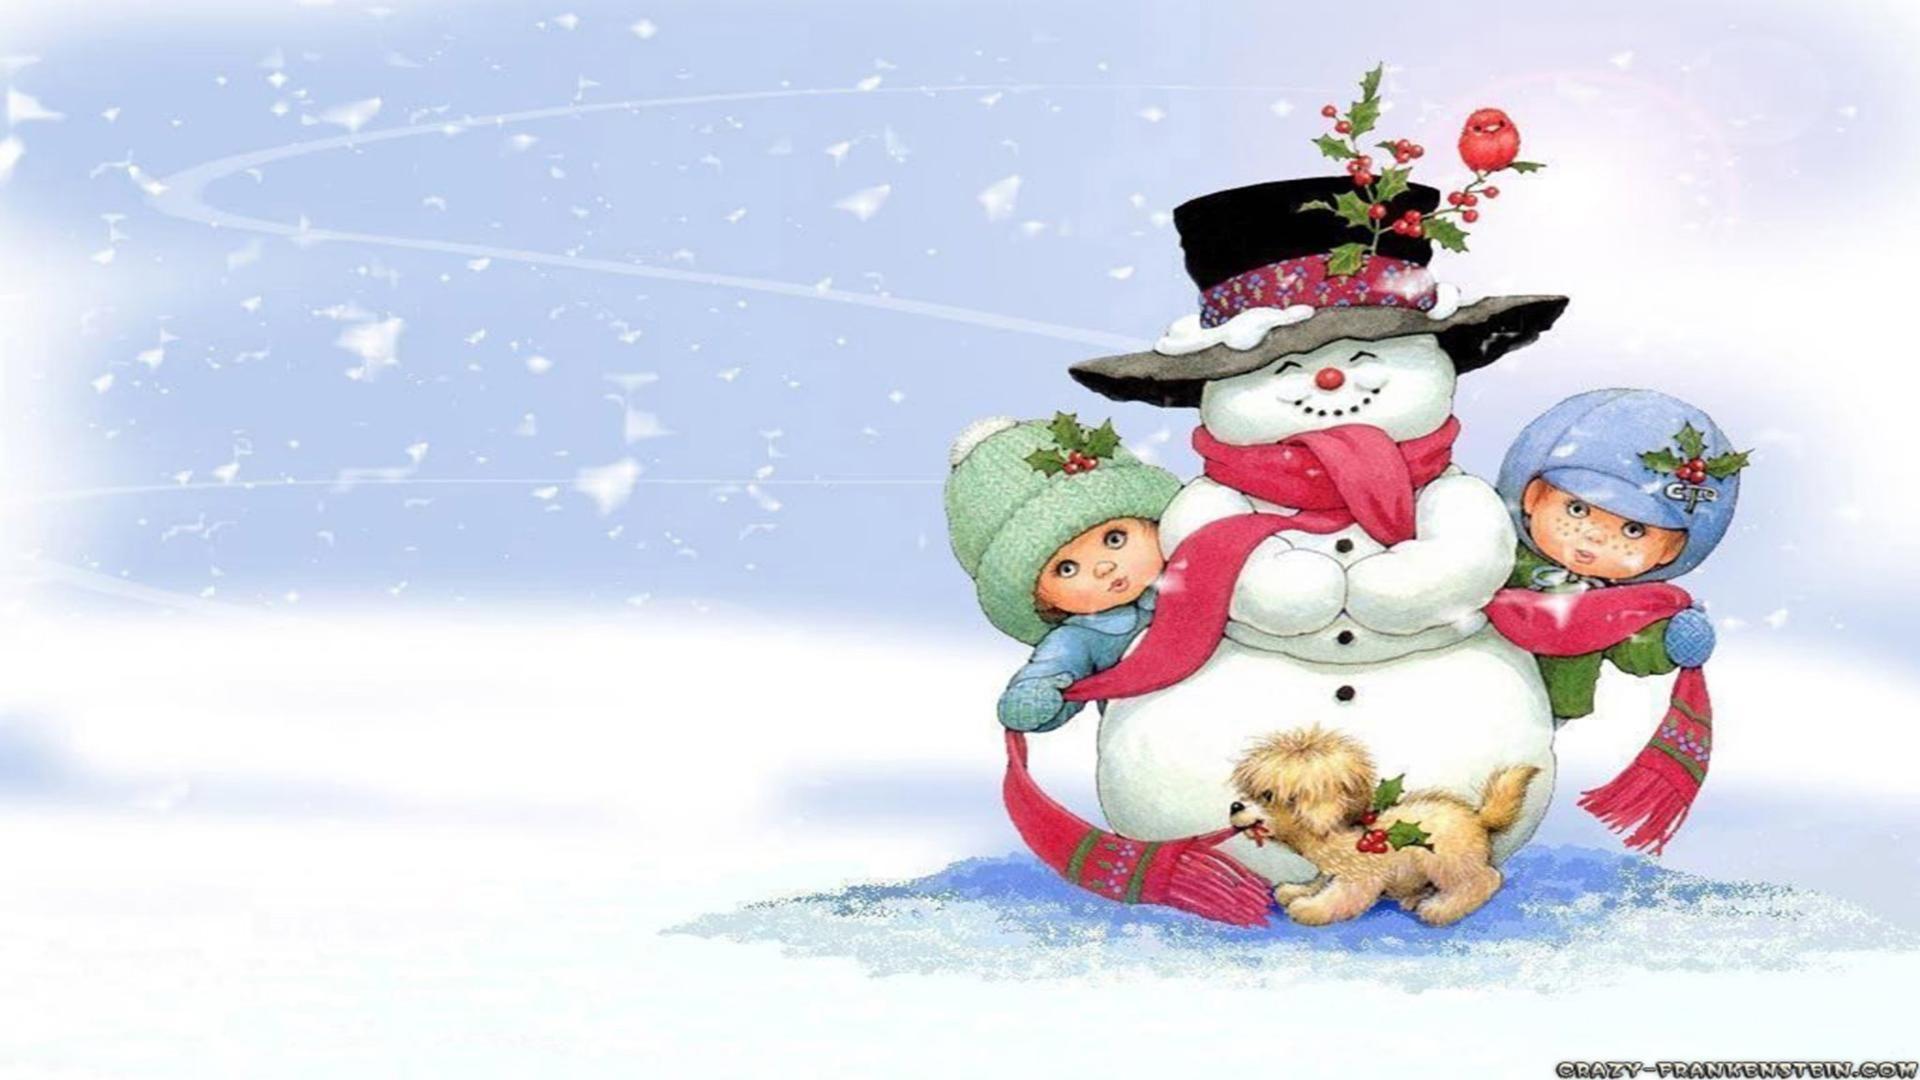 Snowman on Christmas scene 25 december celebration day free